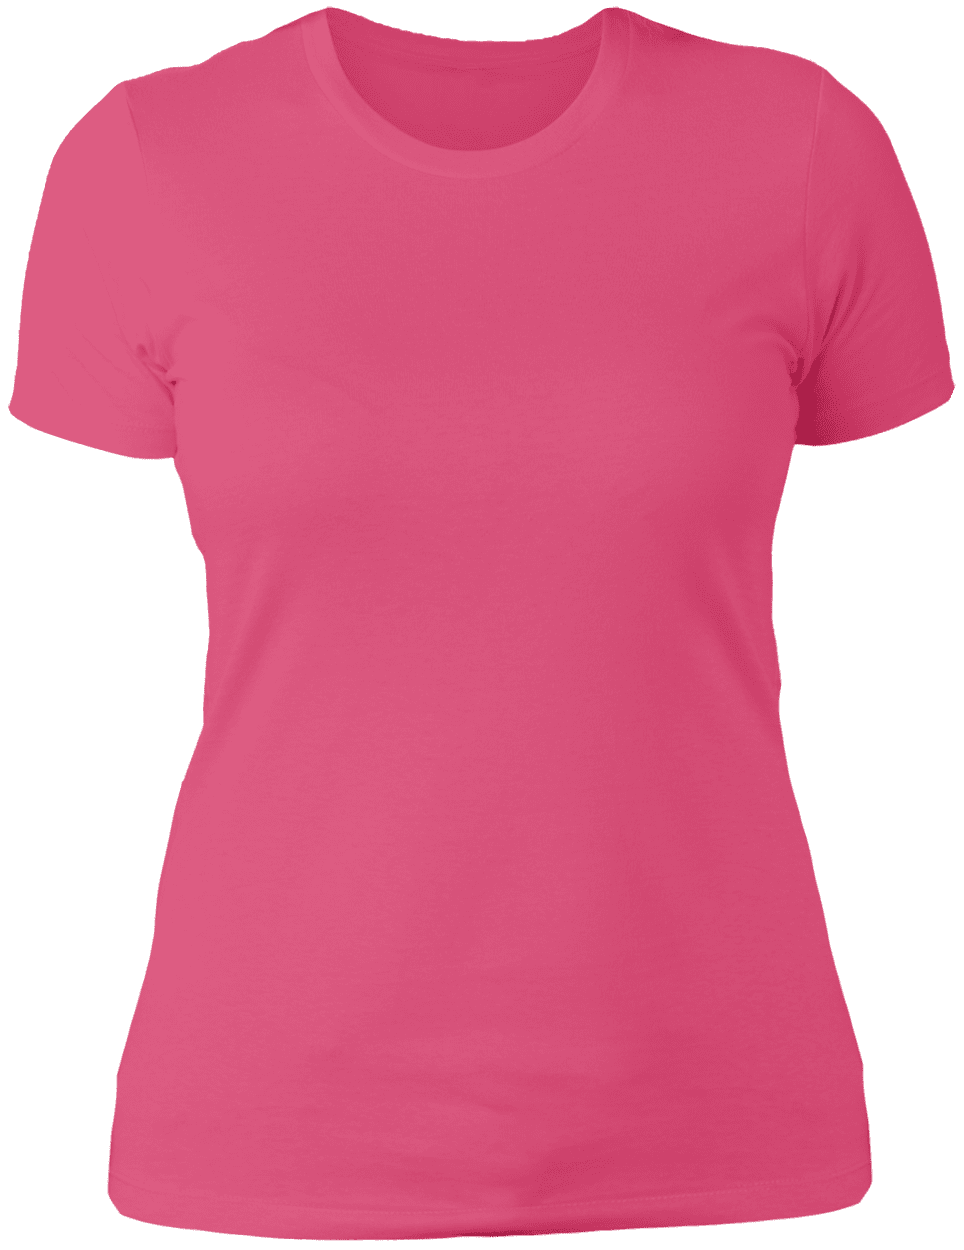 CustomCat Louisiana Girl Thou Shalt T-Shirt - NL3900 Next Level Ladies' Boyfriend T-Shirt Light Pink S